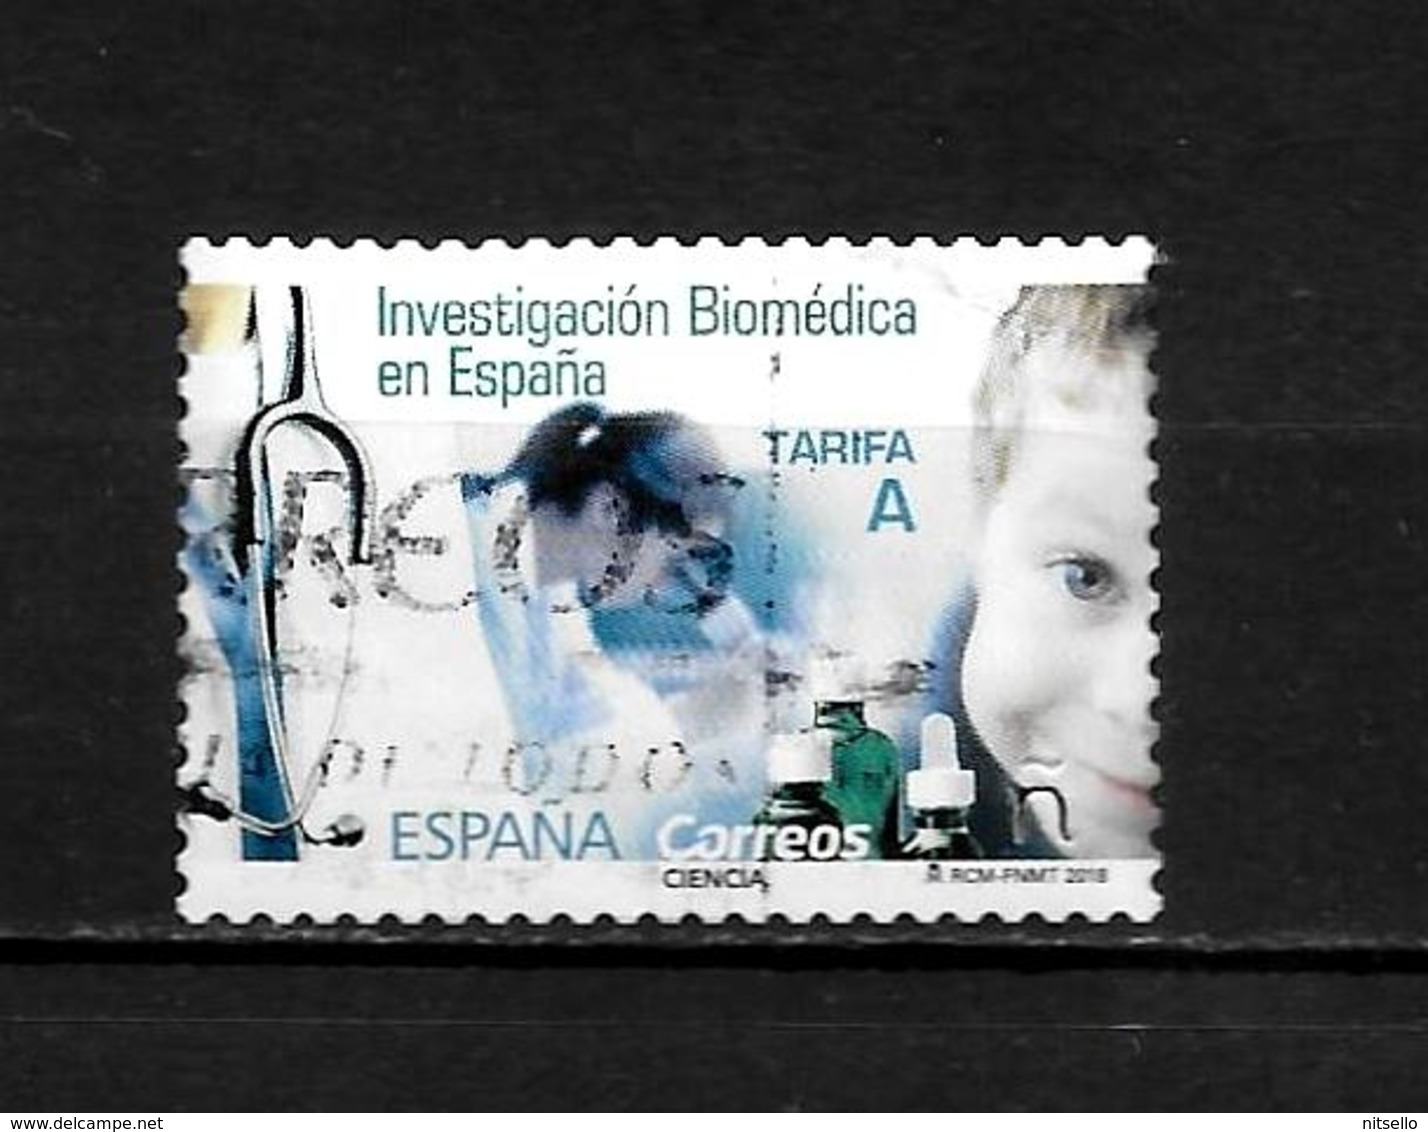 LOTE 2030 ///  ESPAÑA 2018   INVESTIGACION BIOMEDICA EN ESPAÑA  ¡¡¡ OFERTA - LIQUIDATION !!! JE LIQUIDE !!! - Oblitérés